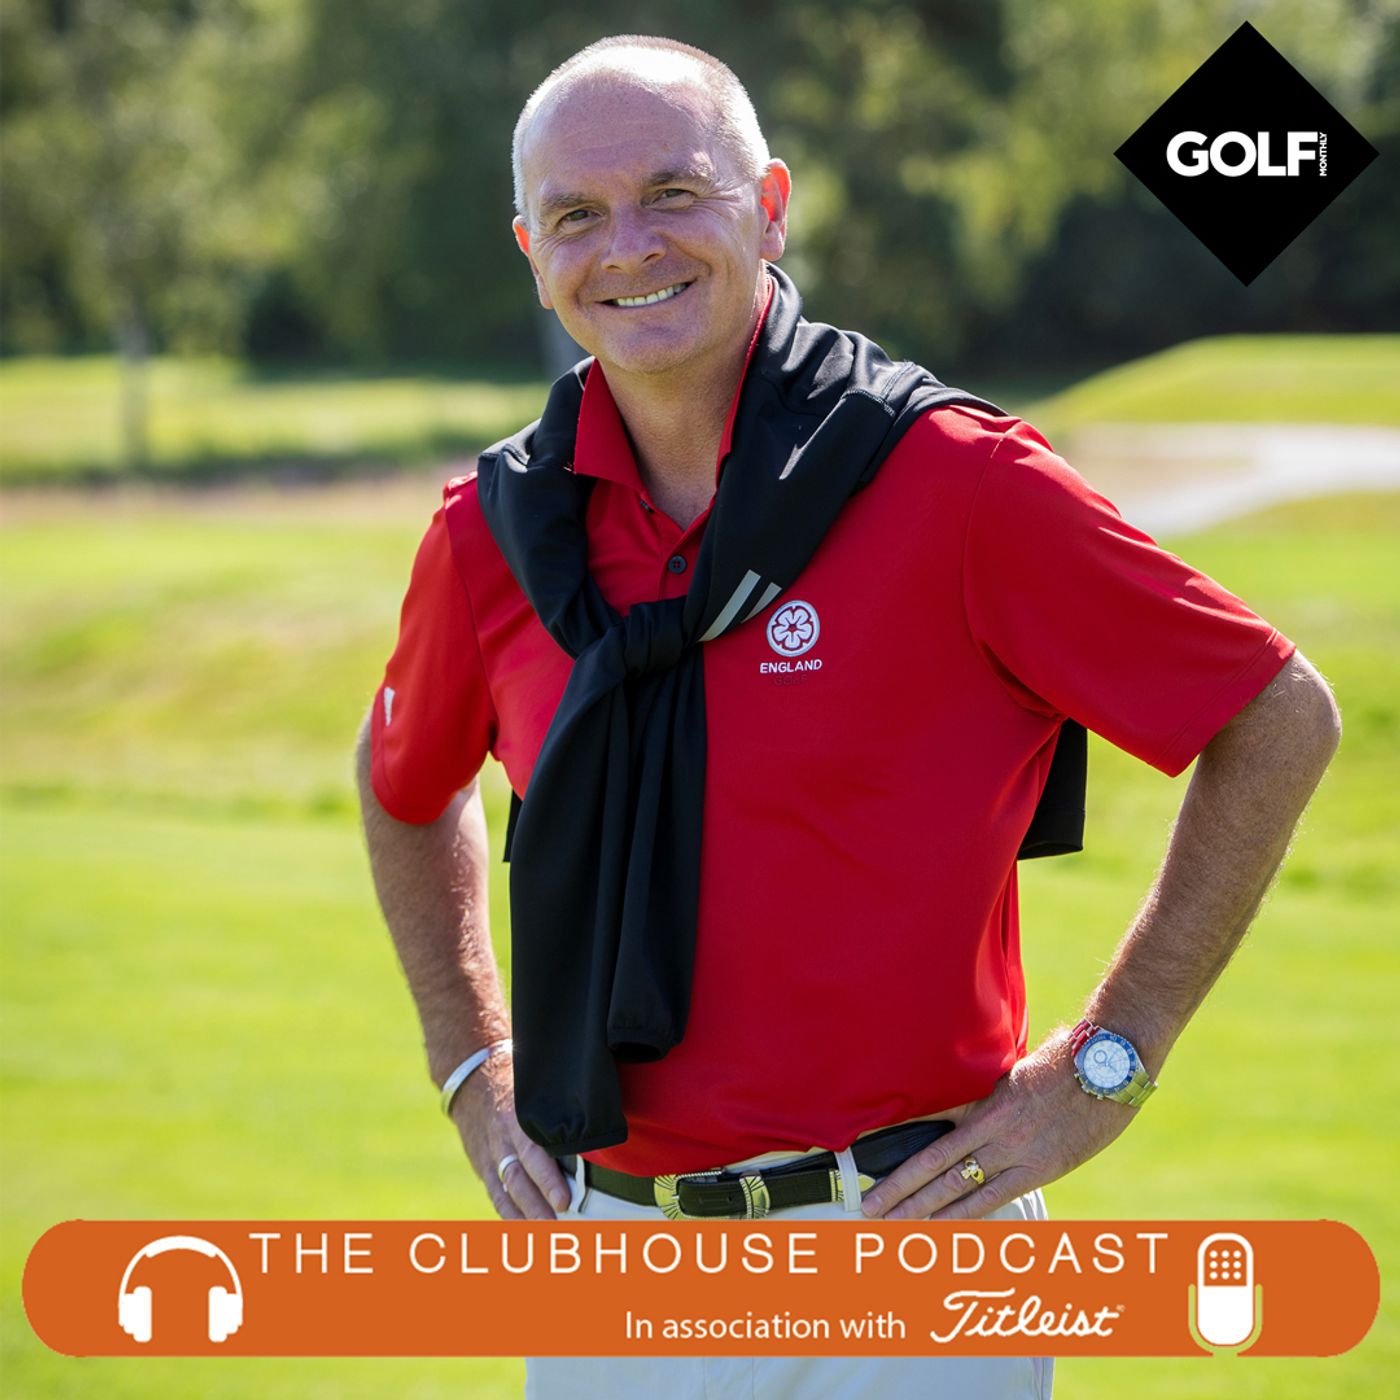 England Golf CEO on iGolf and the pandemic